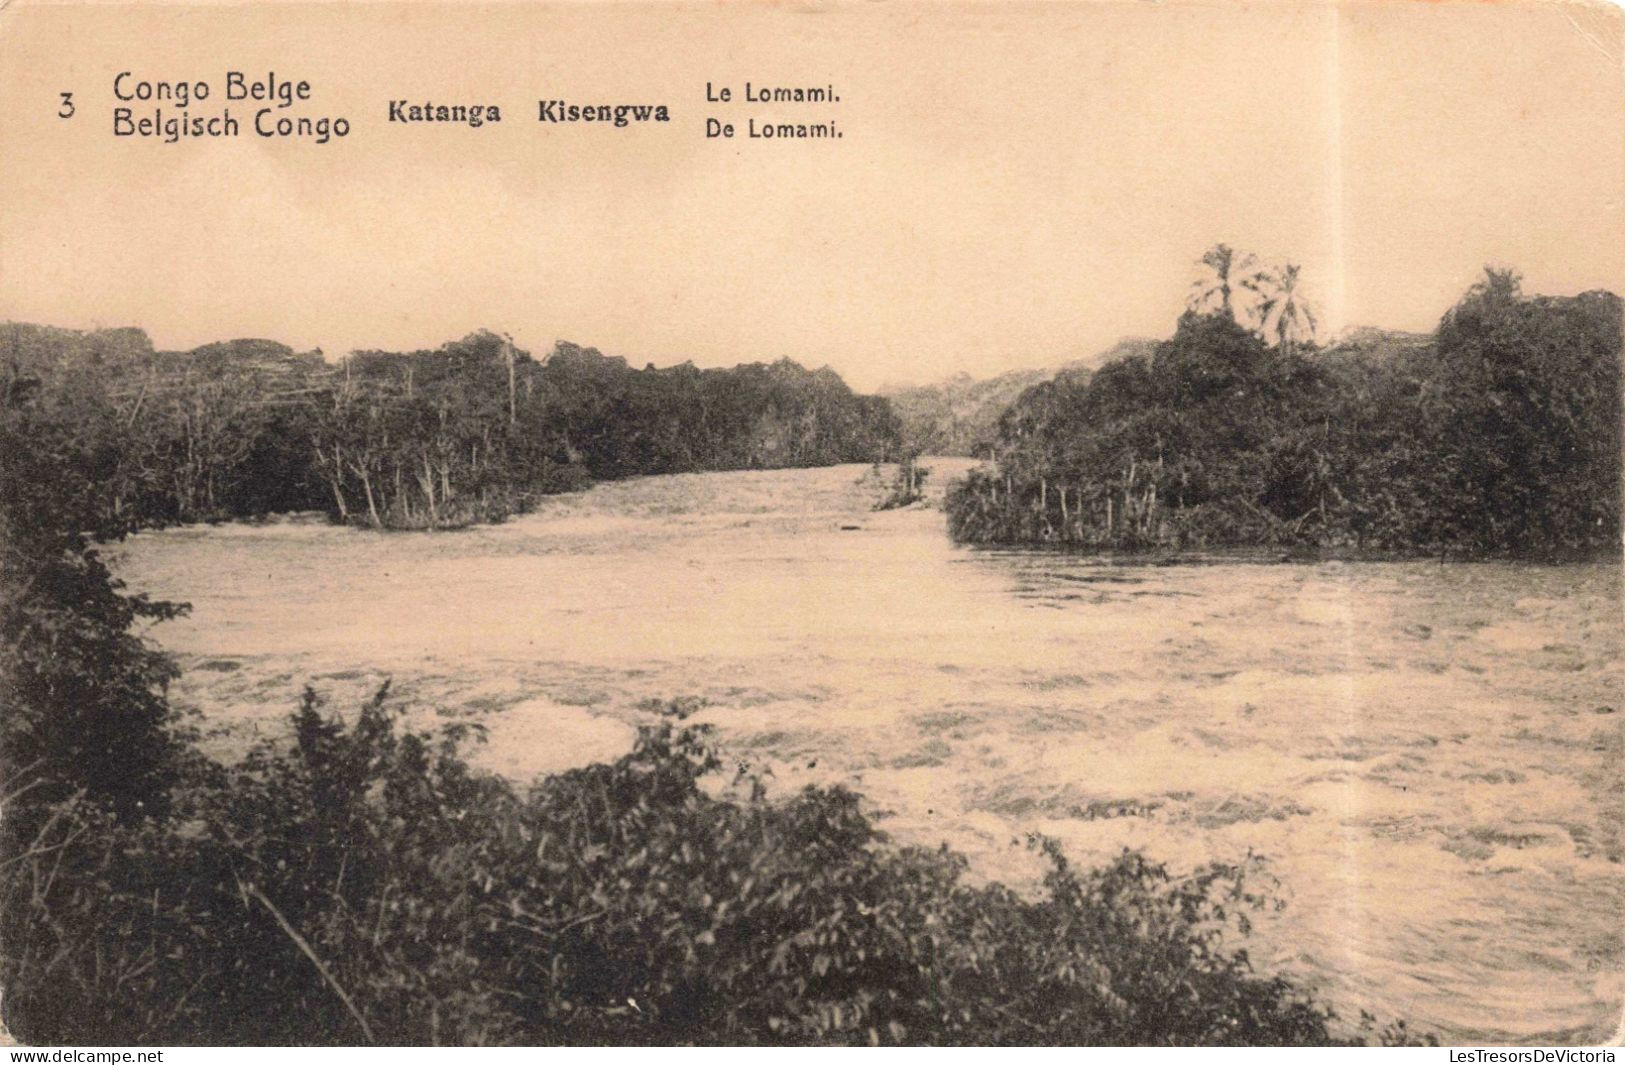 CONGO KINSHASA - Congo Belge - Katanga - Le Lomami - Carte Postale Ancienne - Belgian Congo